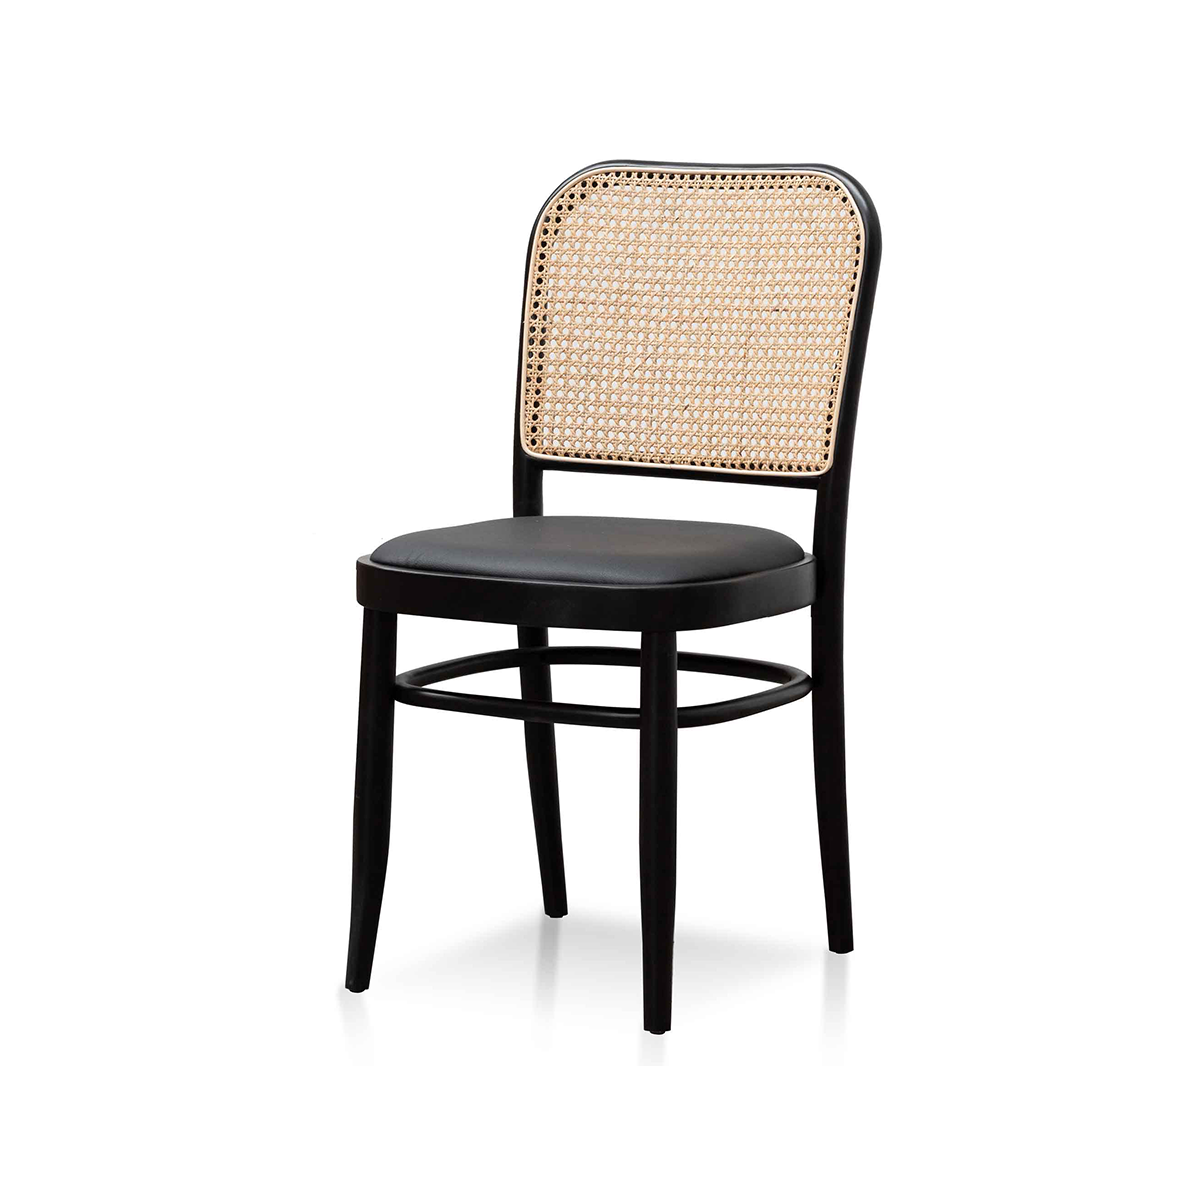 FondHouse Zomo Black Cushion Dining Chair - Natural Rattan